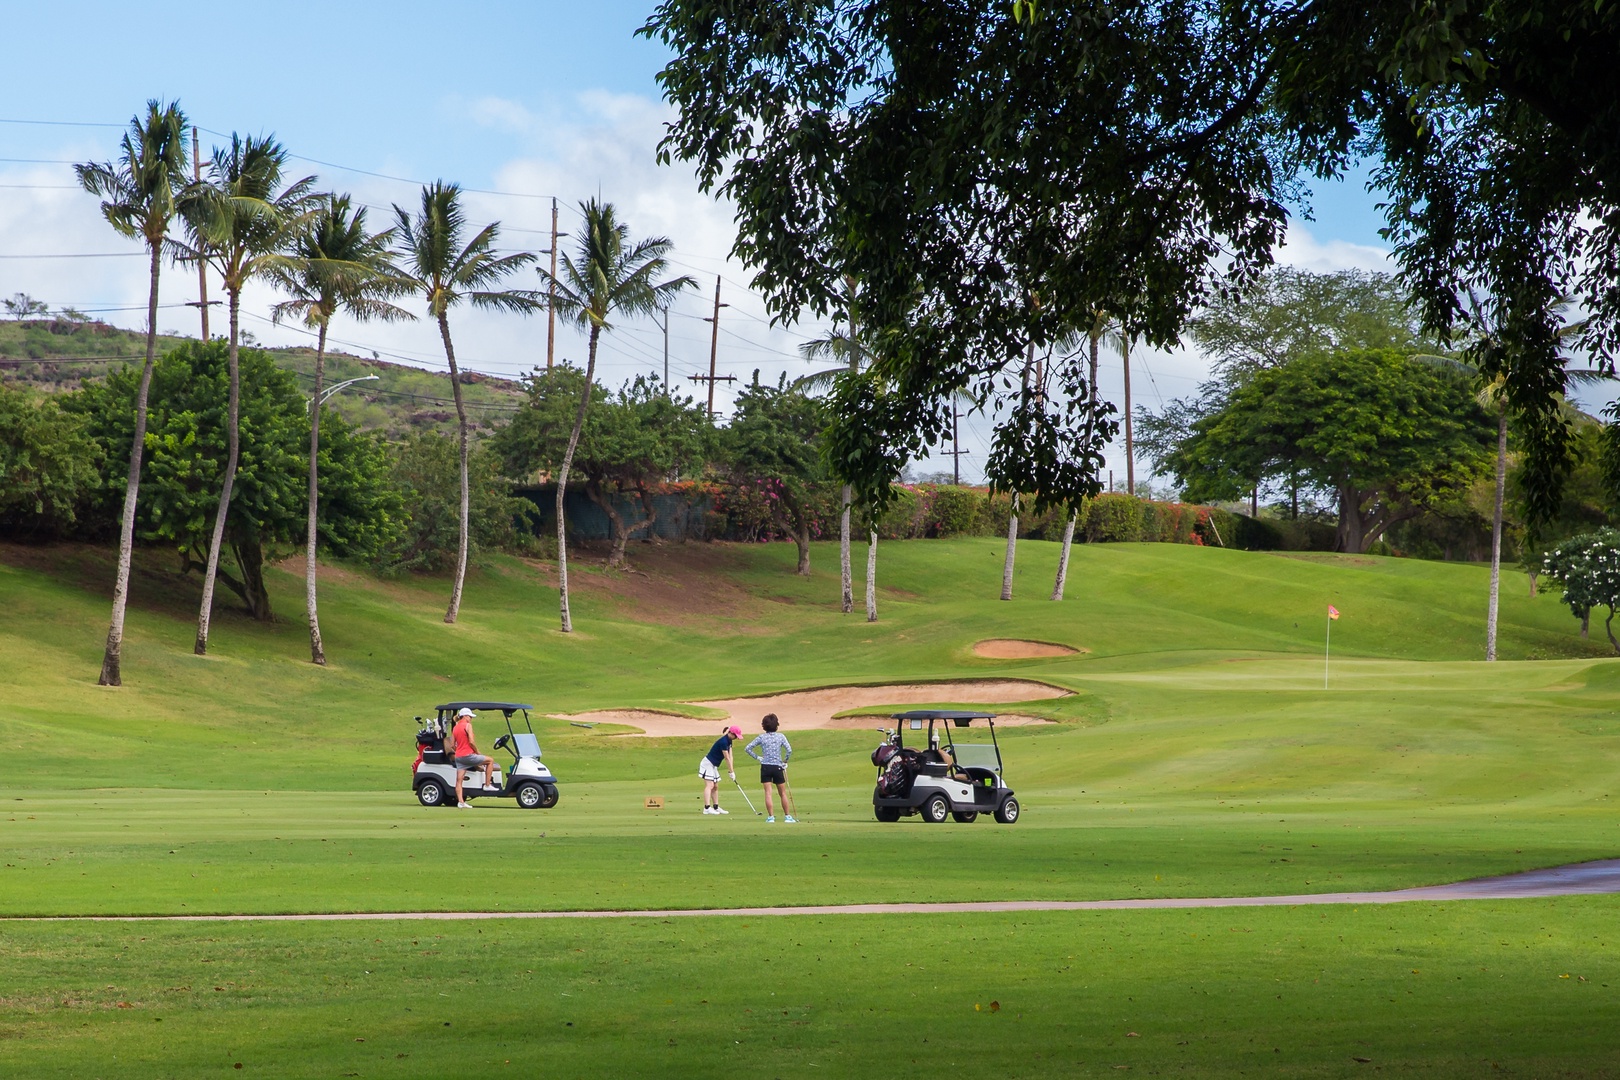 Kapolei Vacation Rentals, Fairways at Ko Olina 18C - The golf course located next to this Ko Olina idyllic condo.